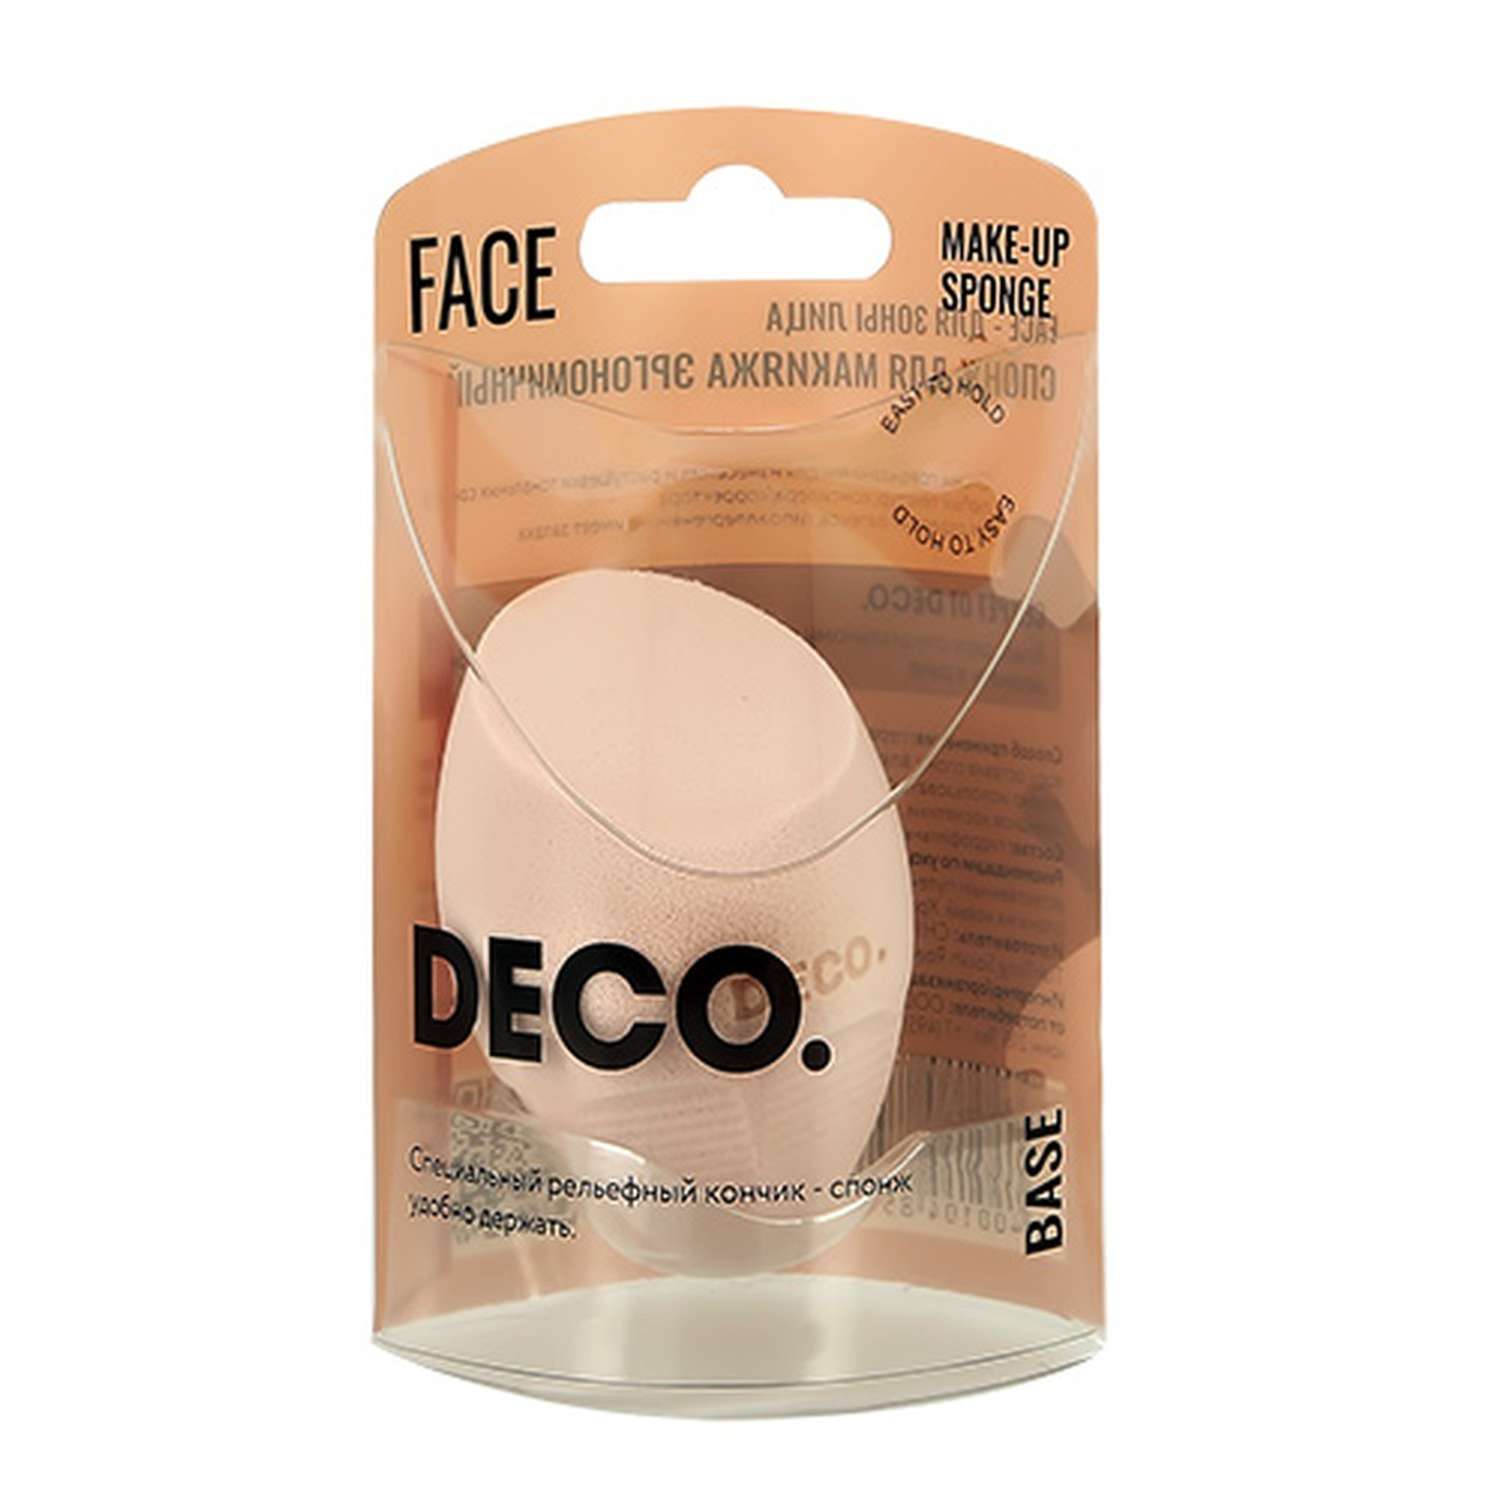 Спонж DECO. для макияжа - фото 1